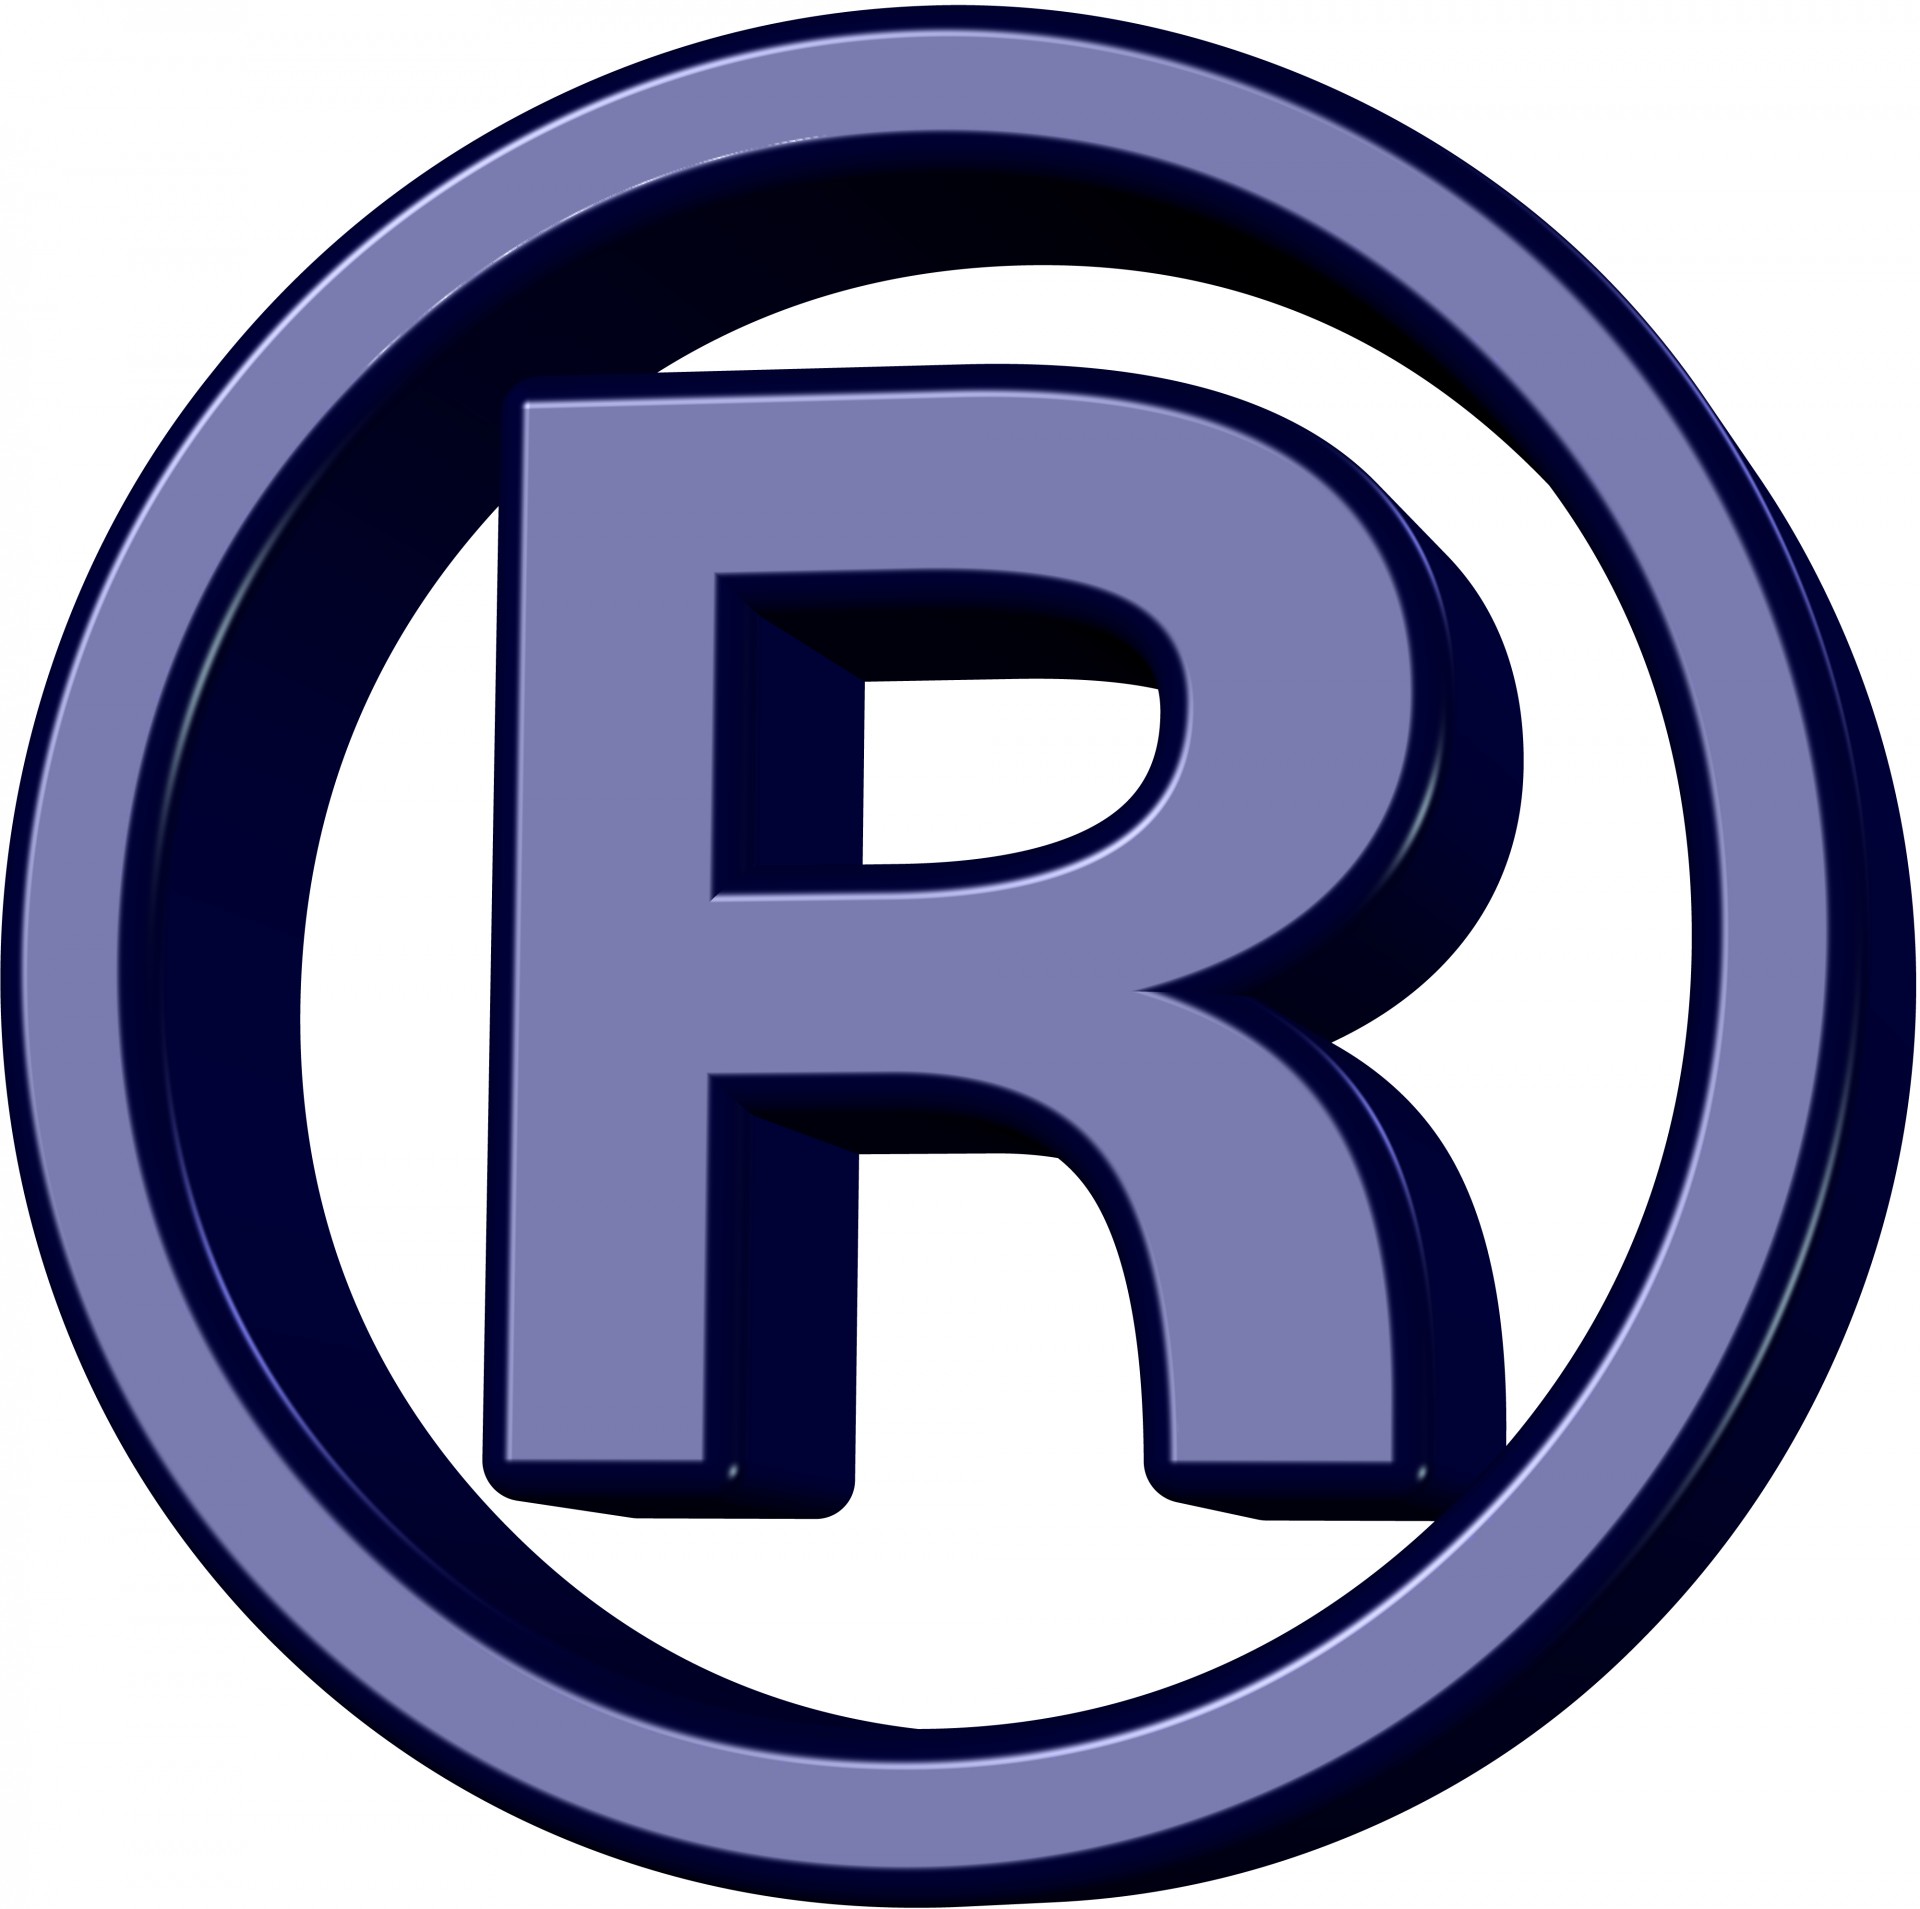 r icon patent free photo